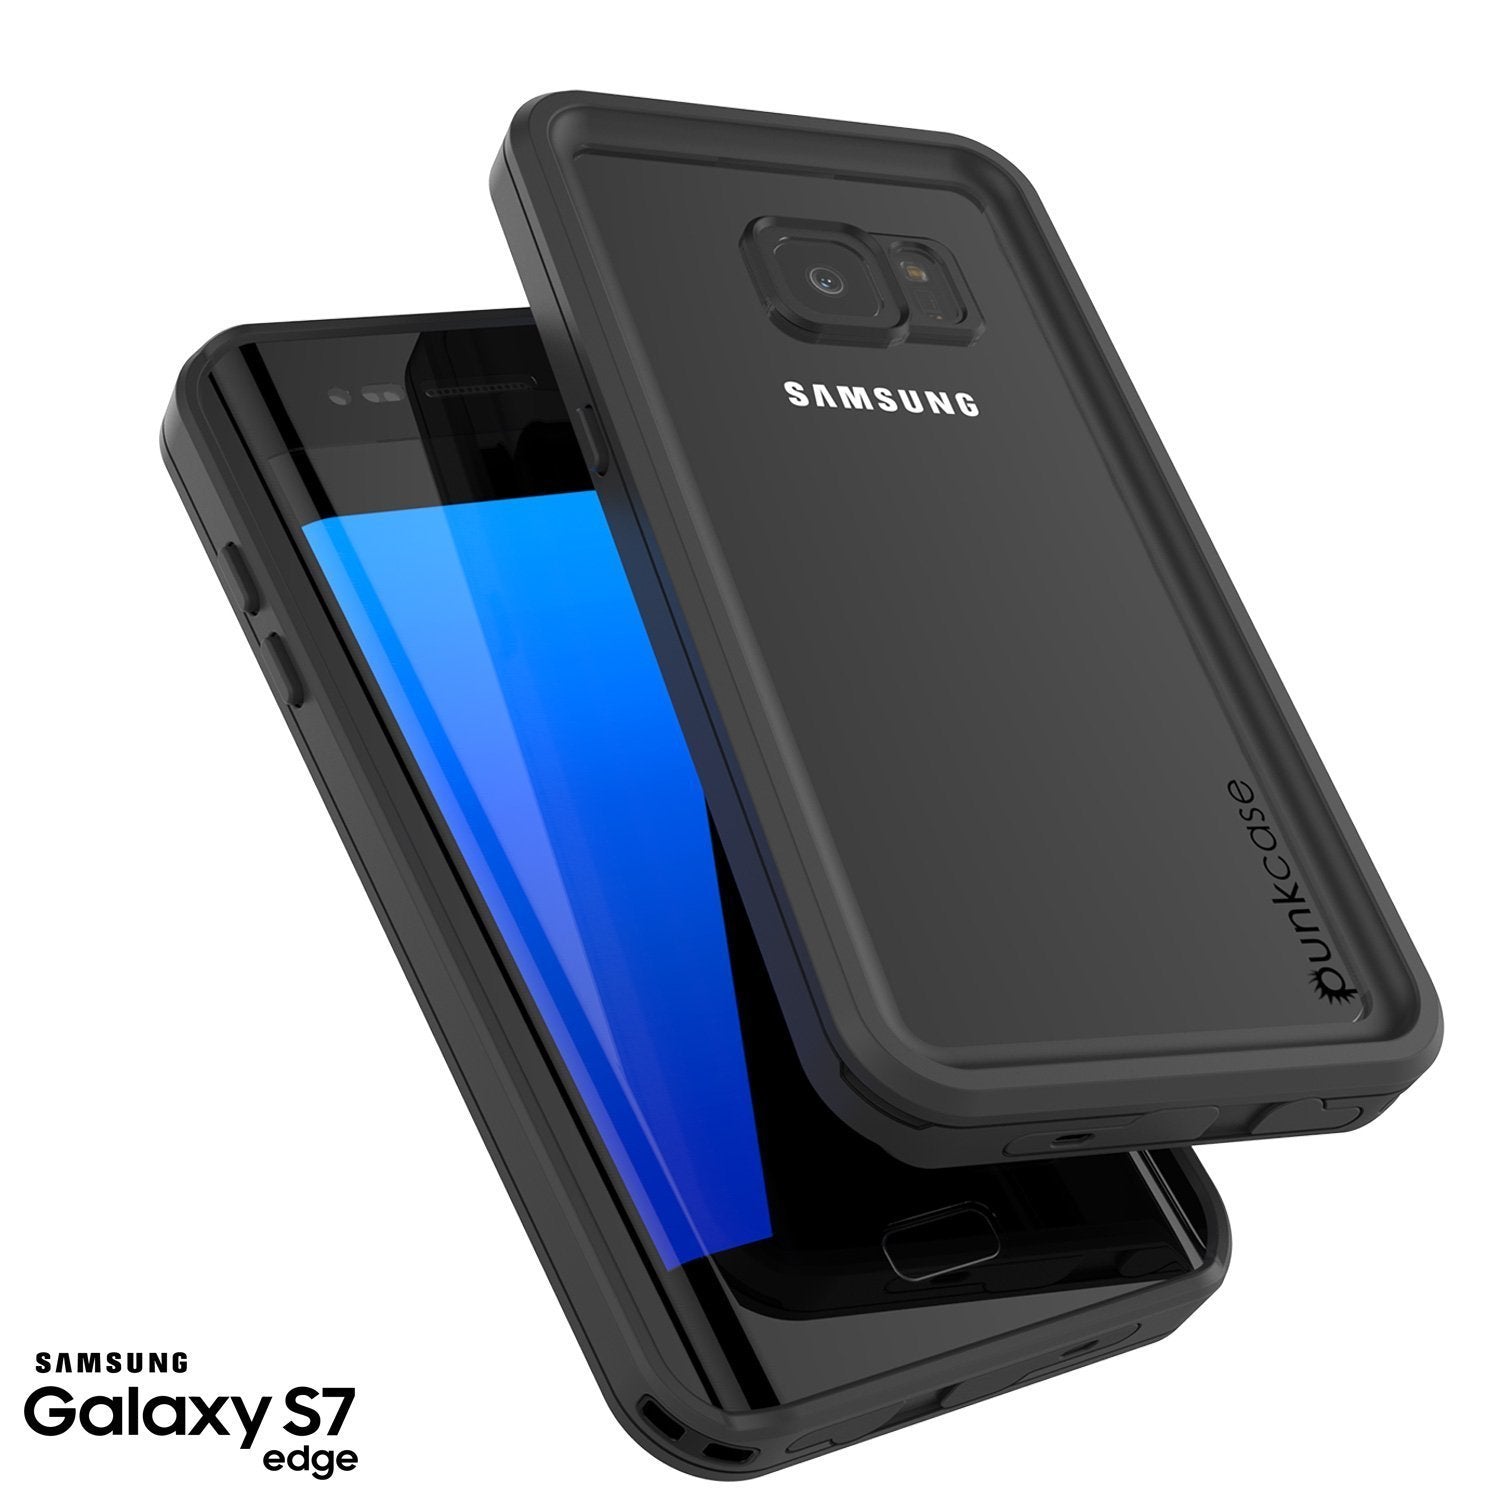 Fysica Vervreemding vasthouden Galaxy S7 Edge Waterproof Case, Punkcase [Extreme Series] [Slim Fit] A